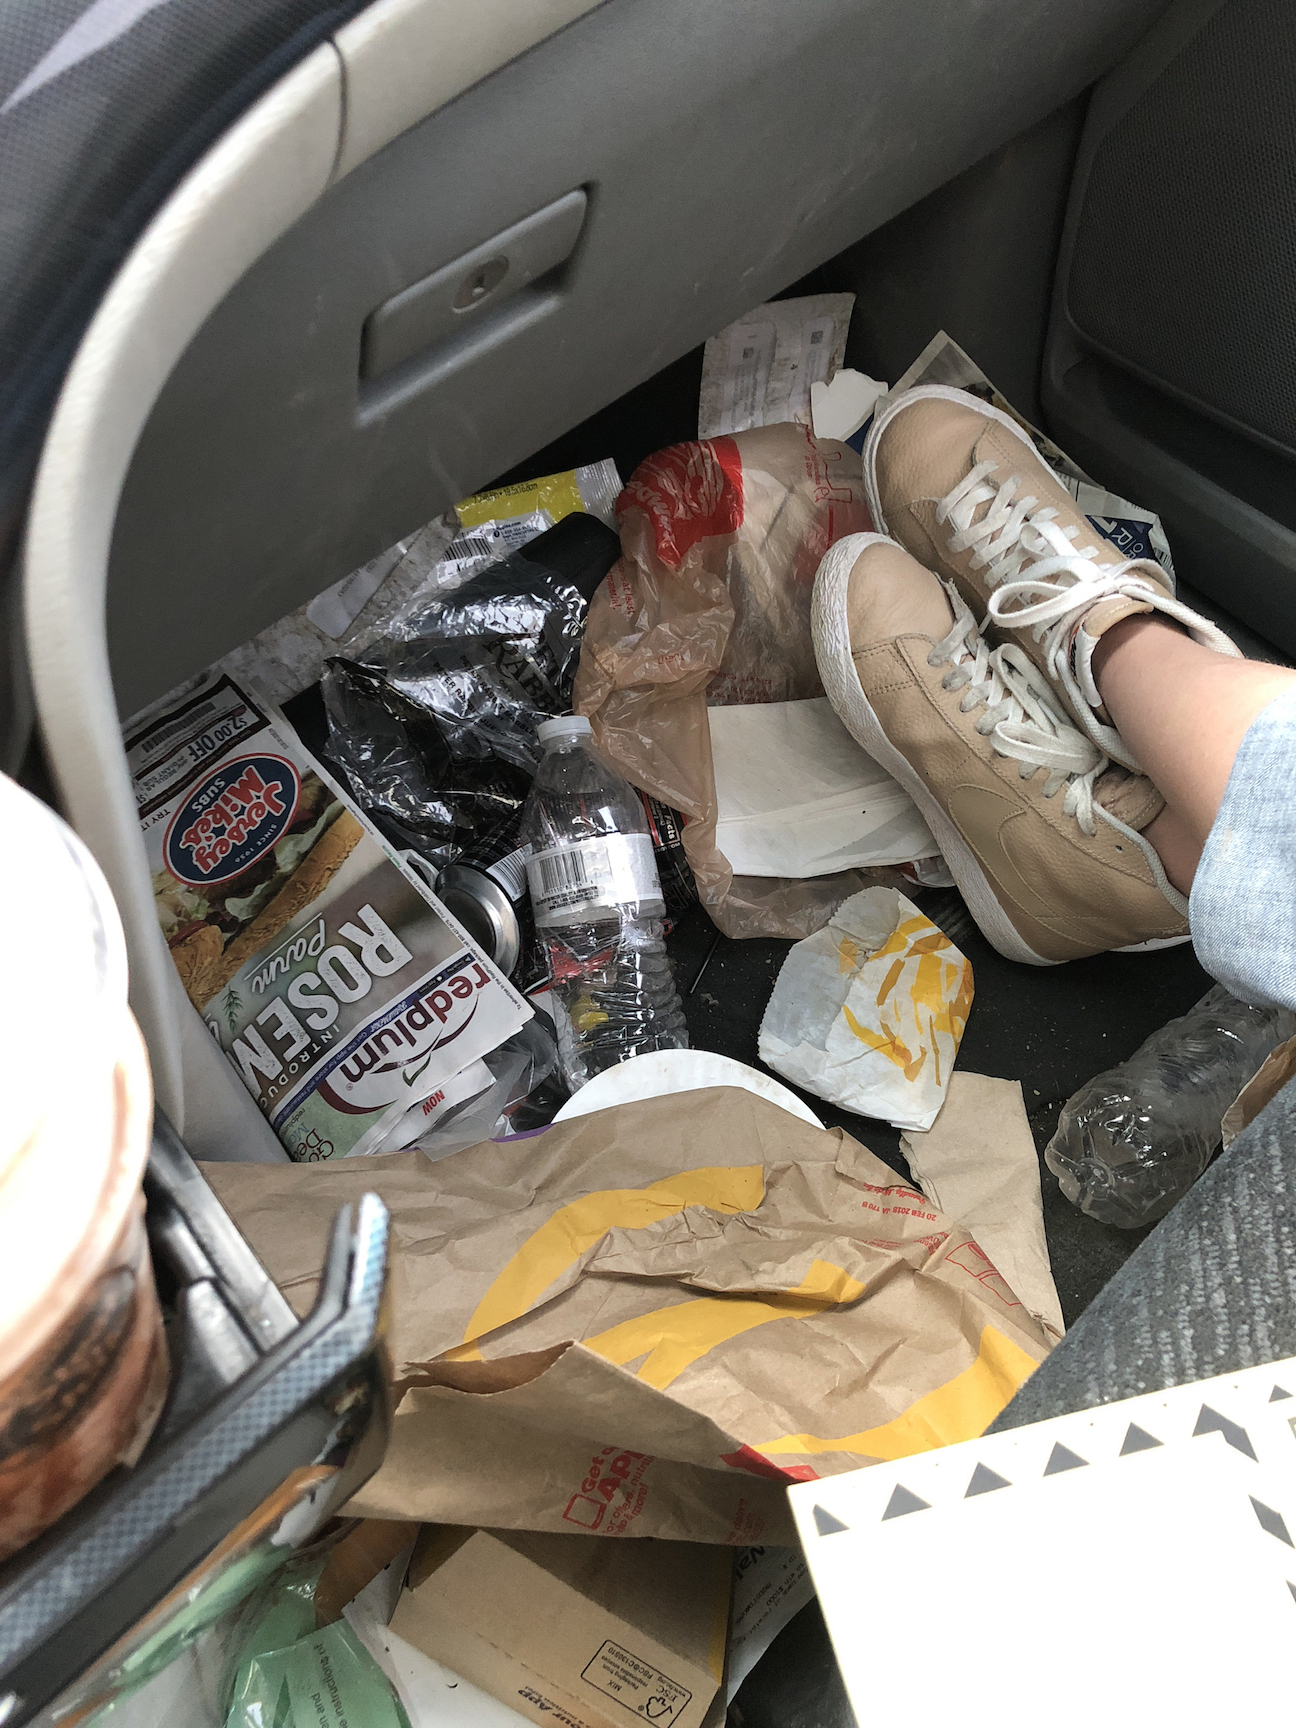 Trash on car floor